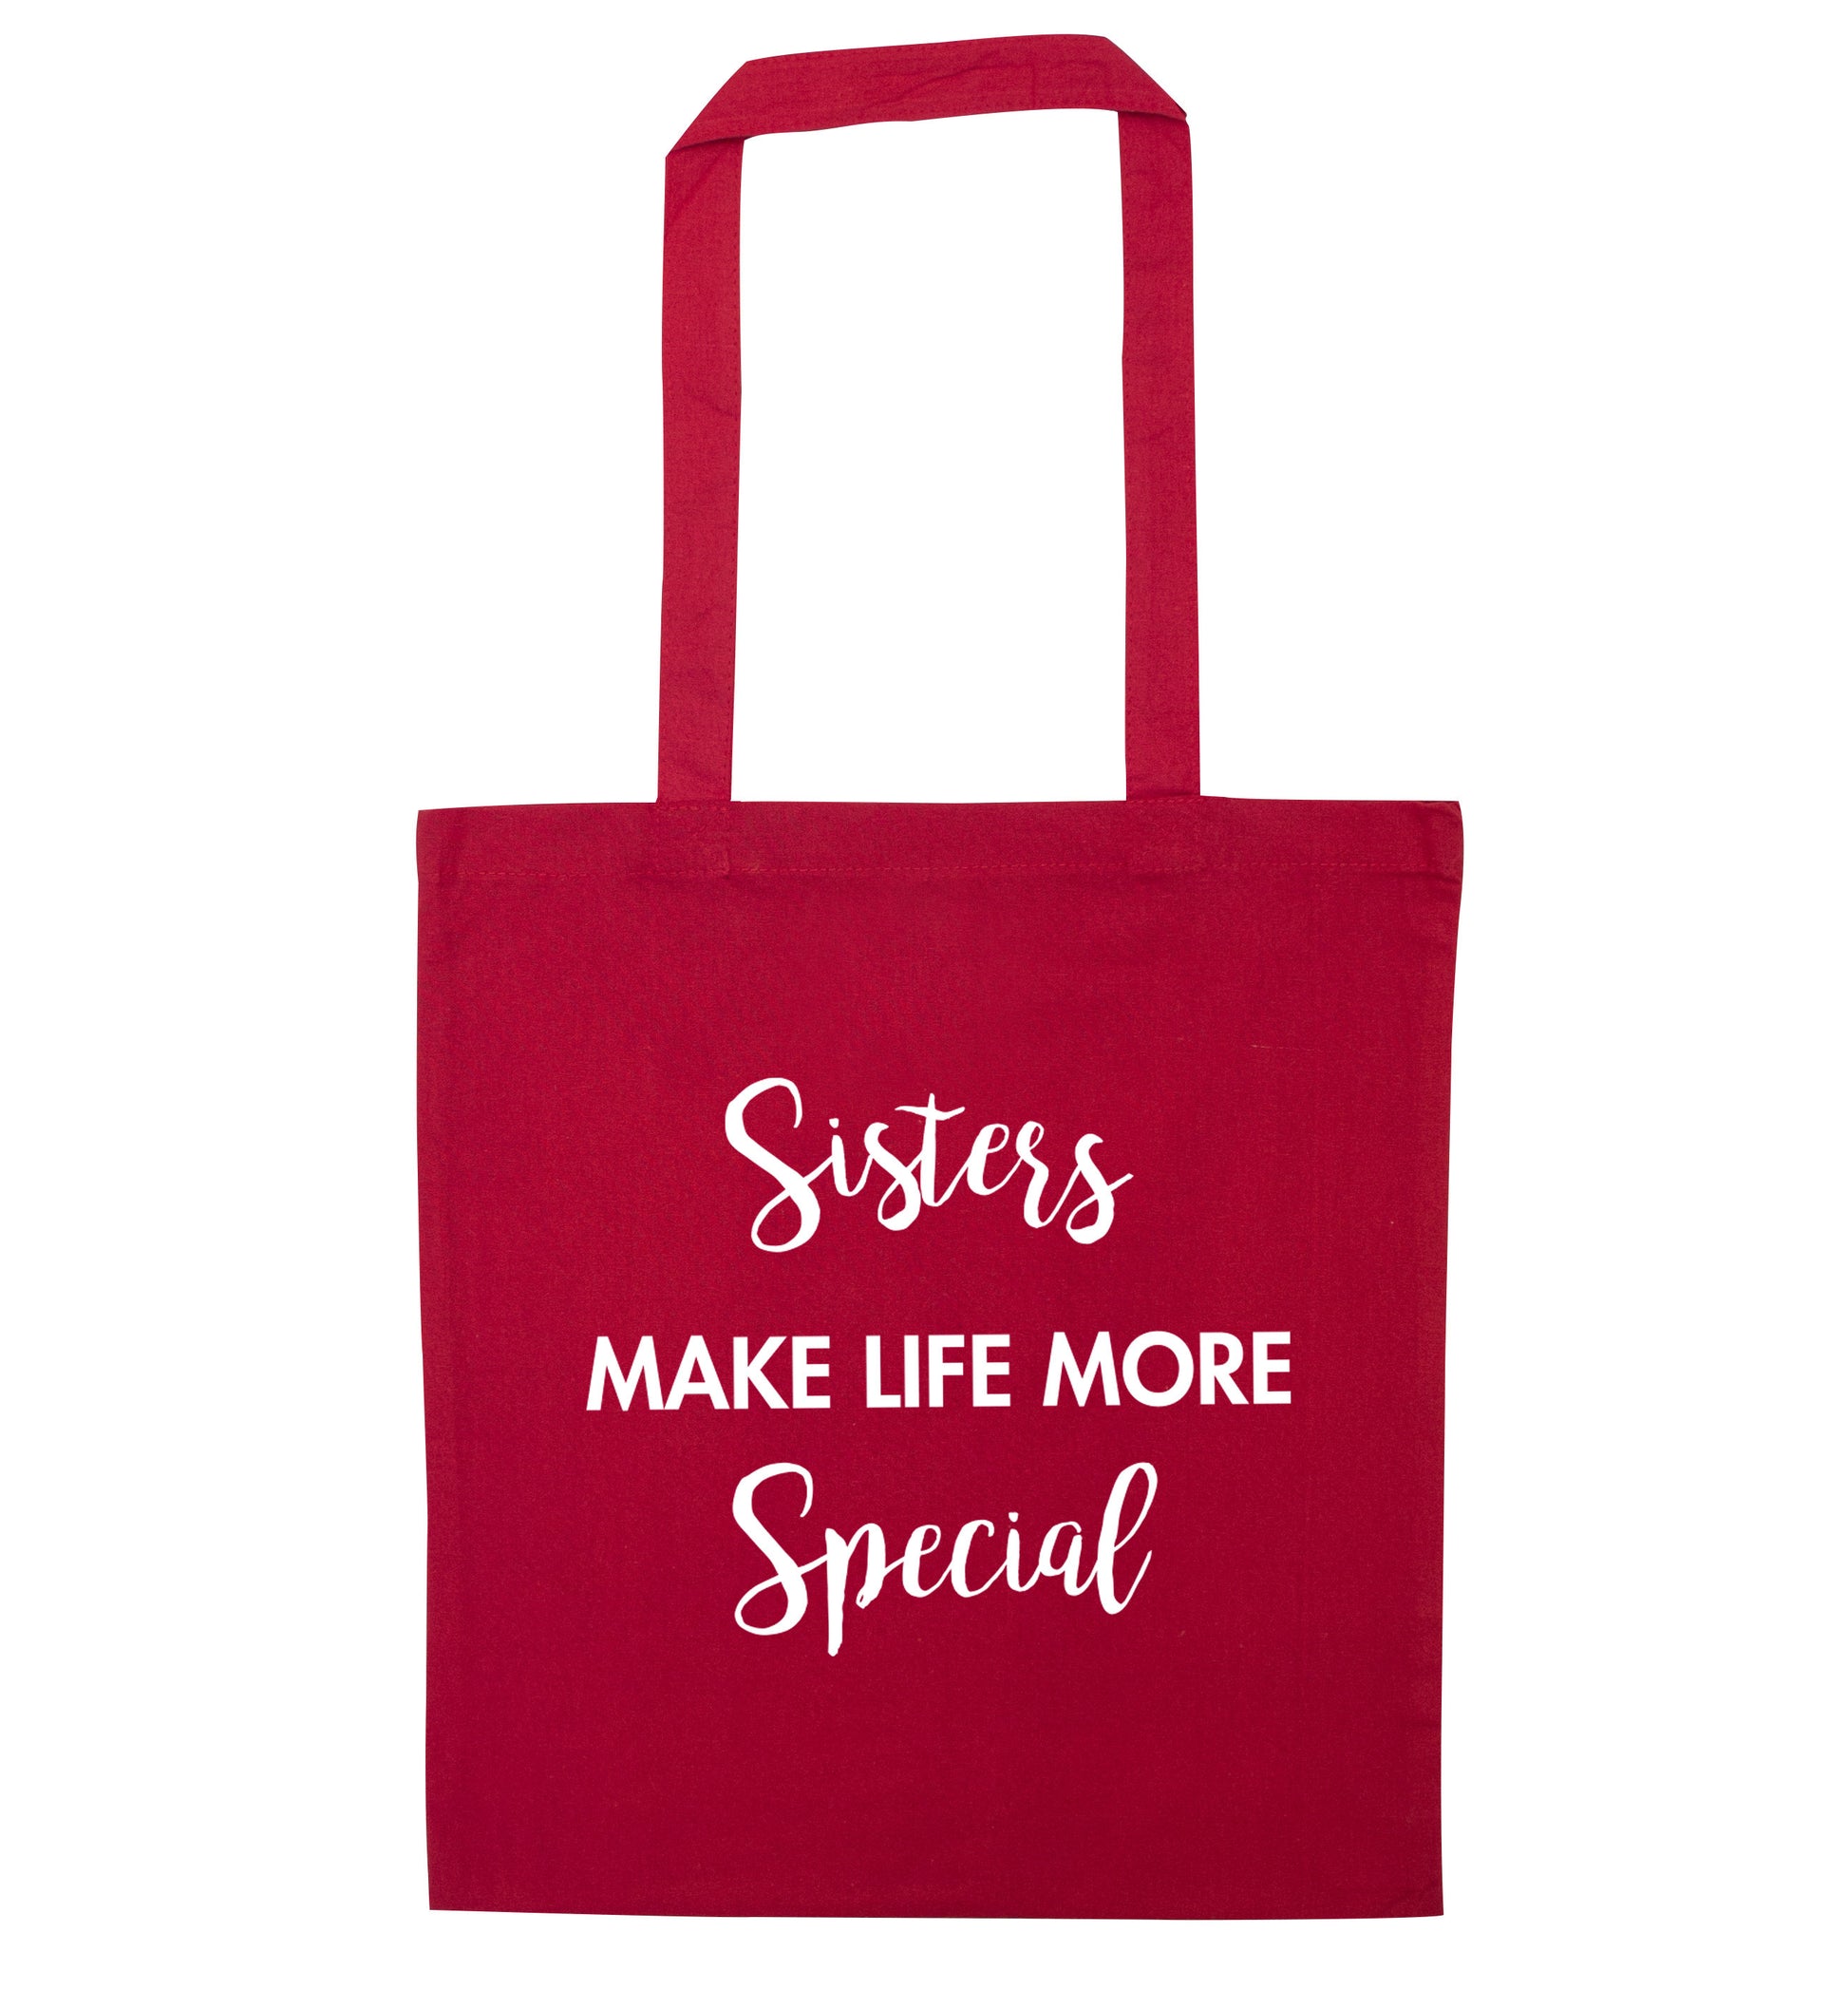 Sisters make life more special red tote bag